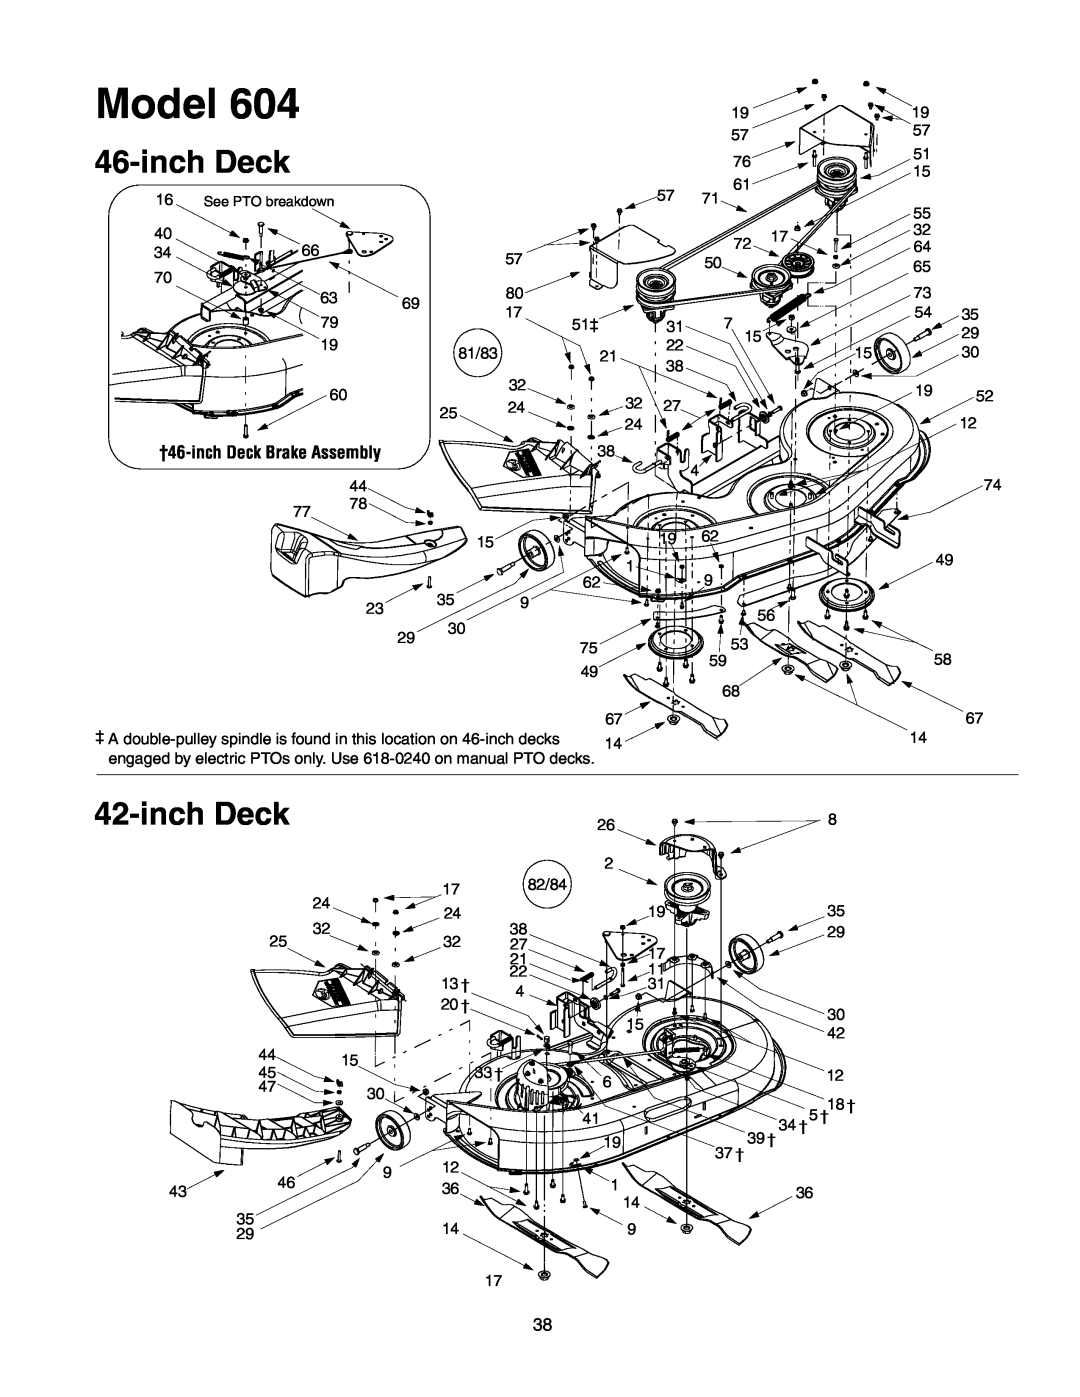 MTD 604 manual †46-inch Deck Brake Assembly, Model 